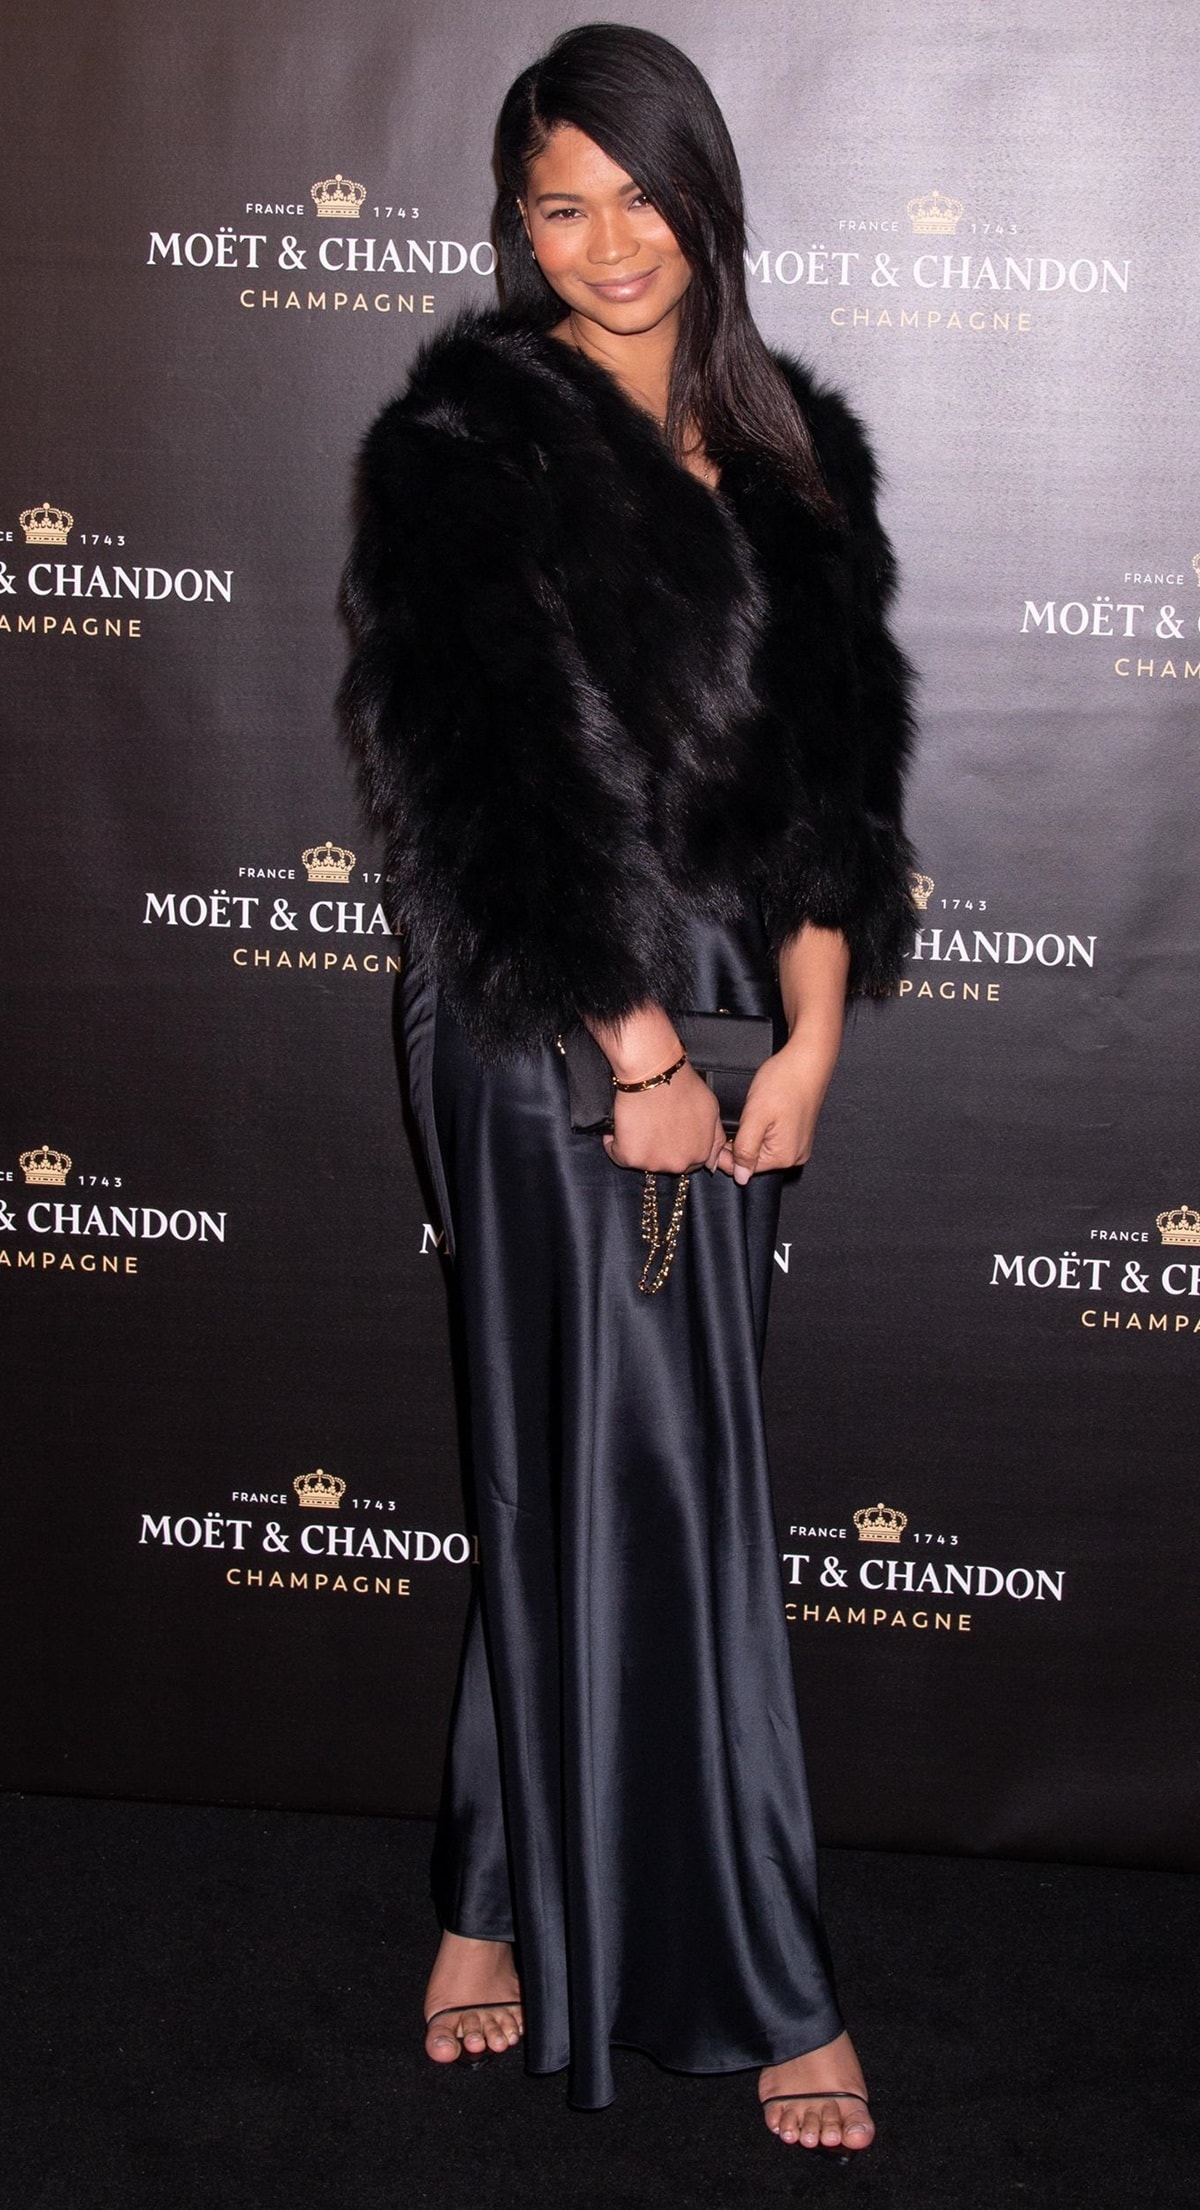 Chanel Iman attends the Moet & Chandon Holiday Season Celebration